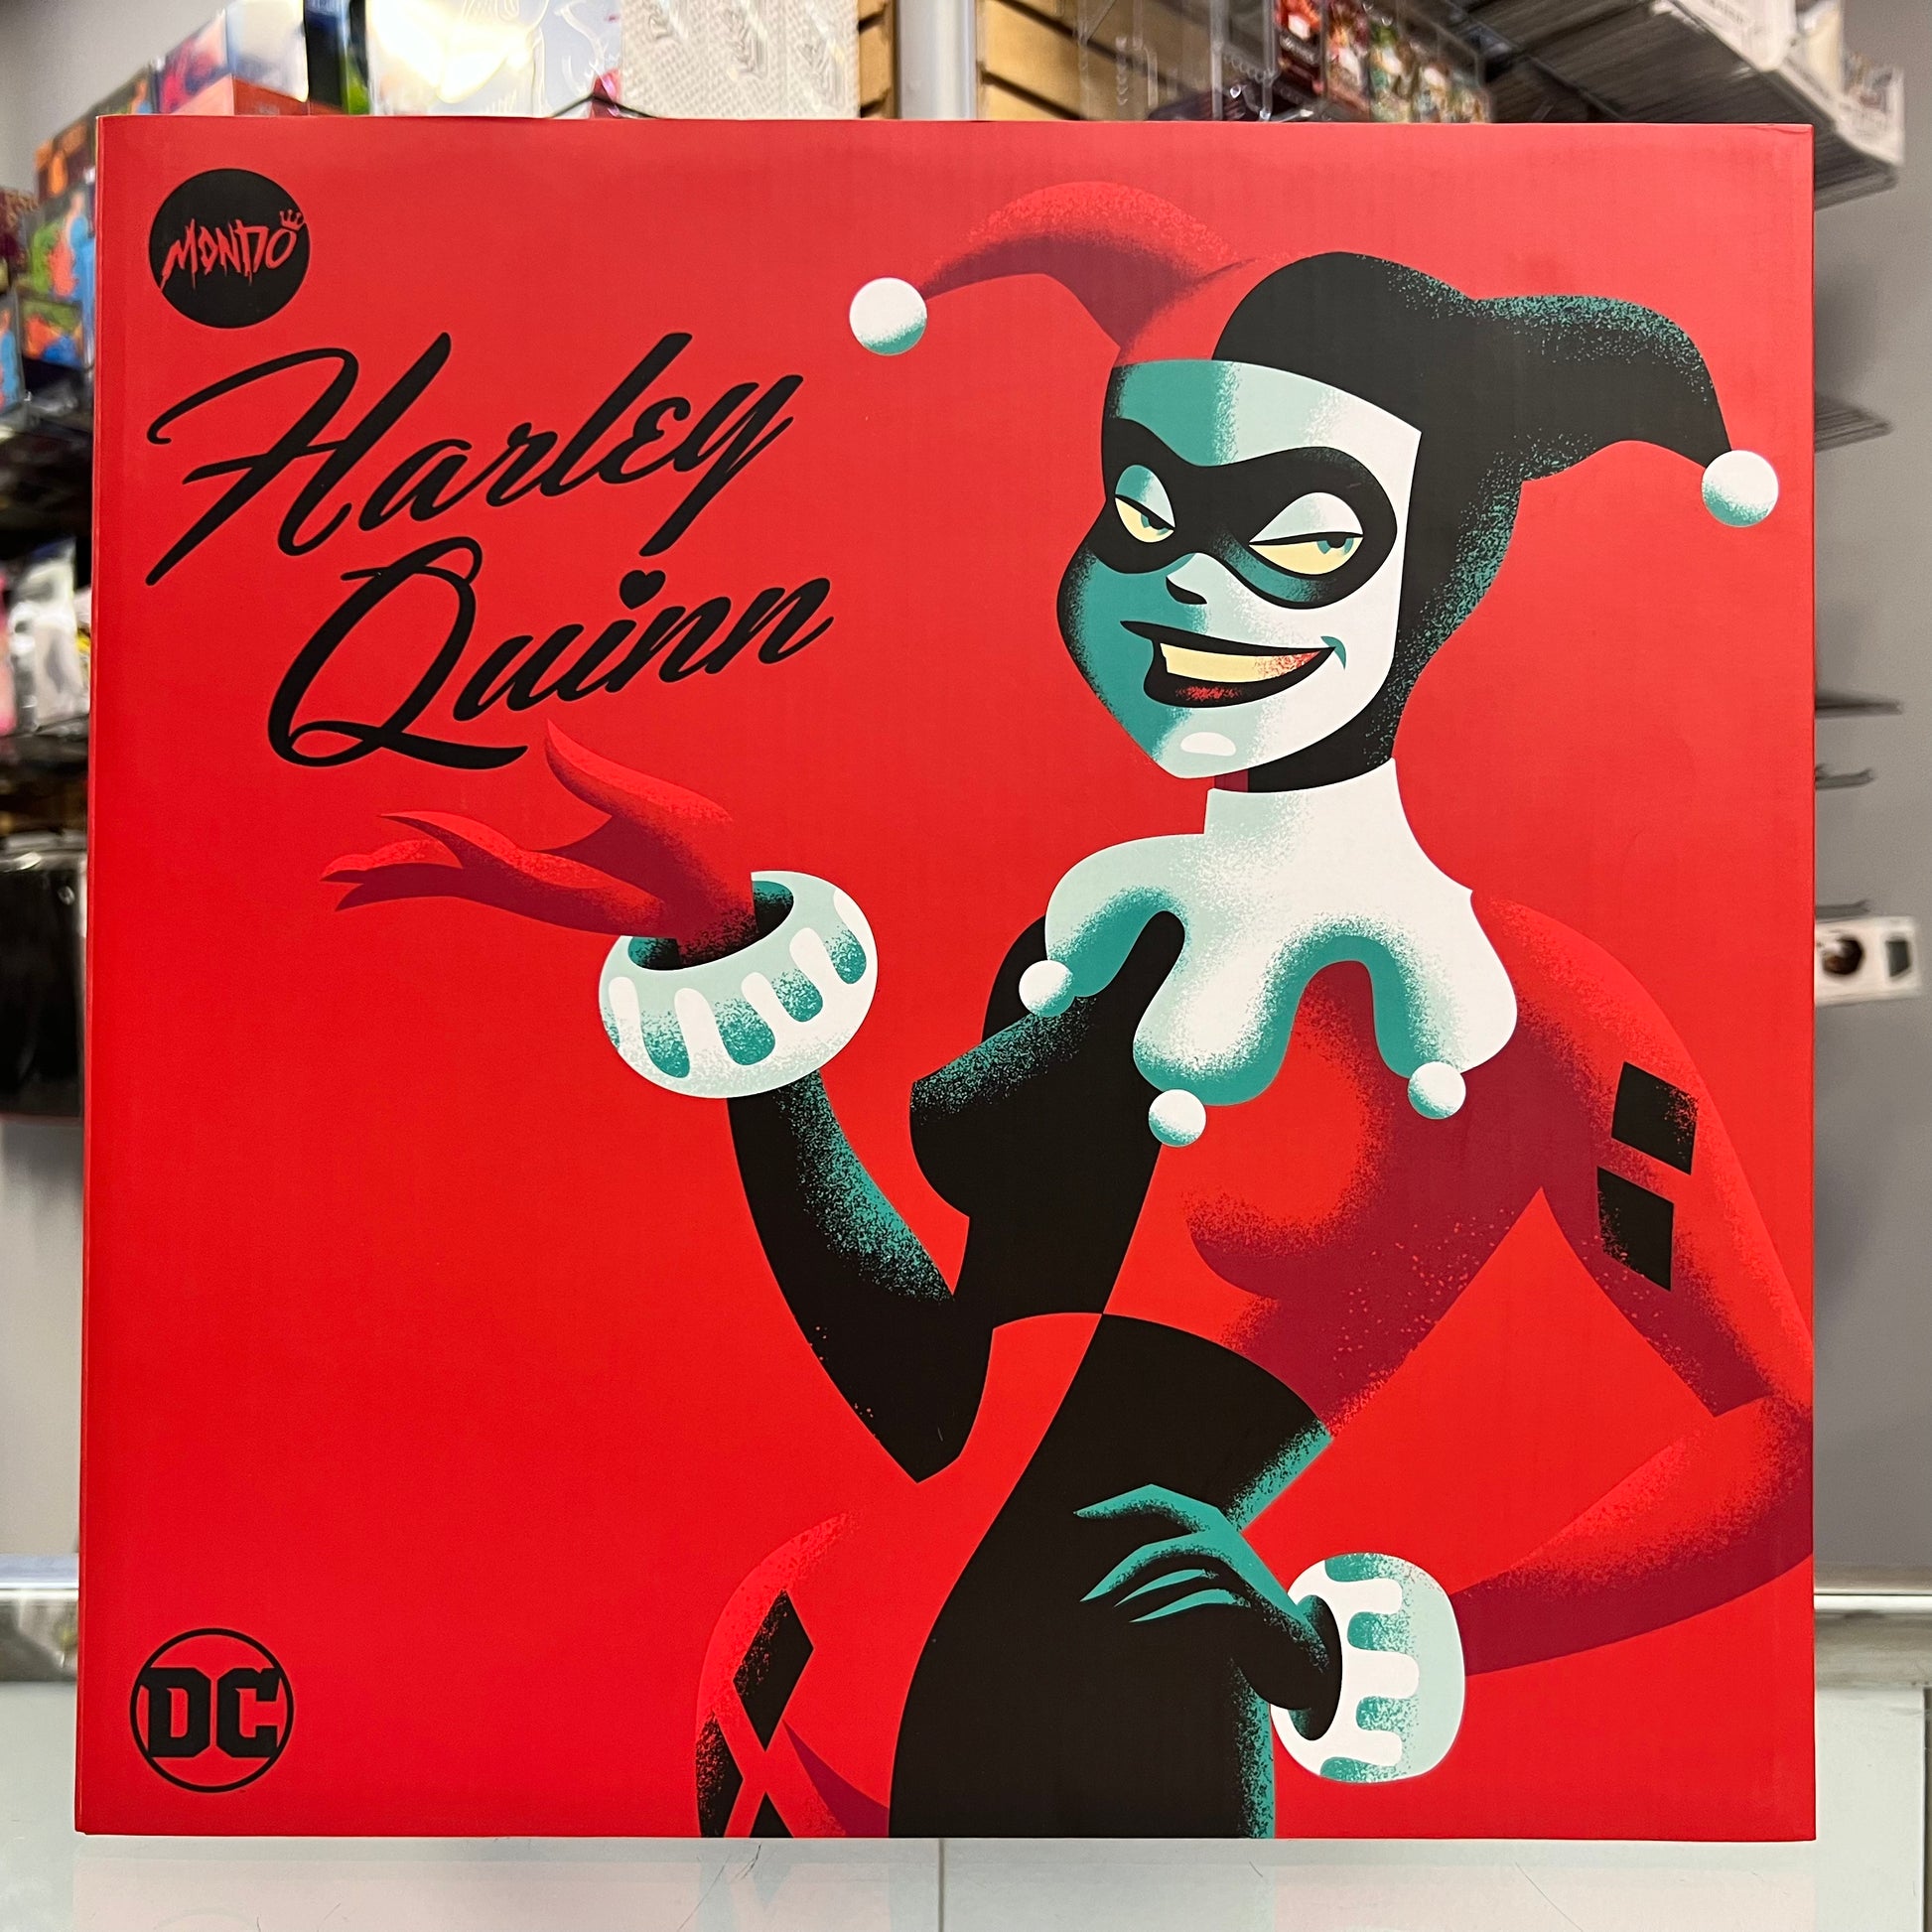 Batman: The Animated Series - Harley Quinn 1/6 Scale Figure